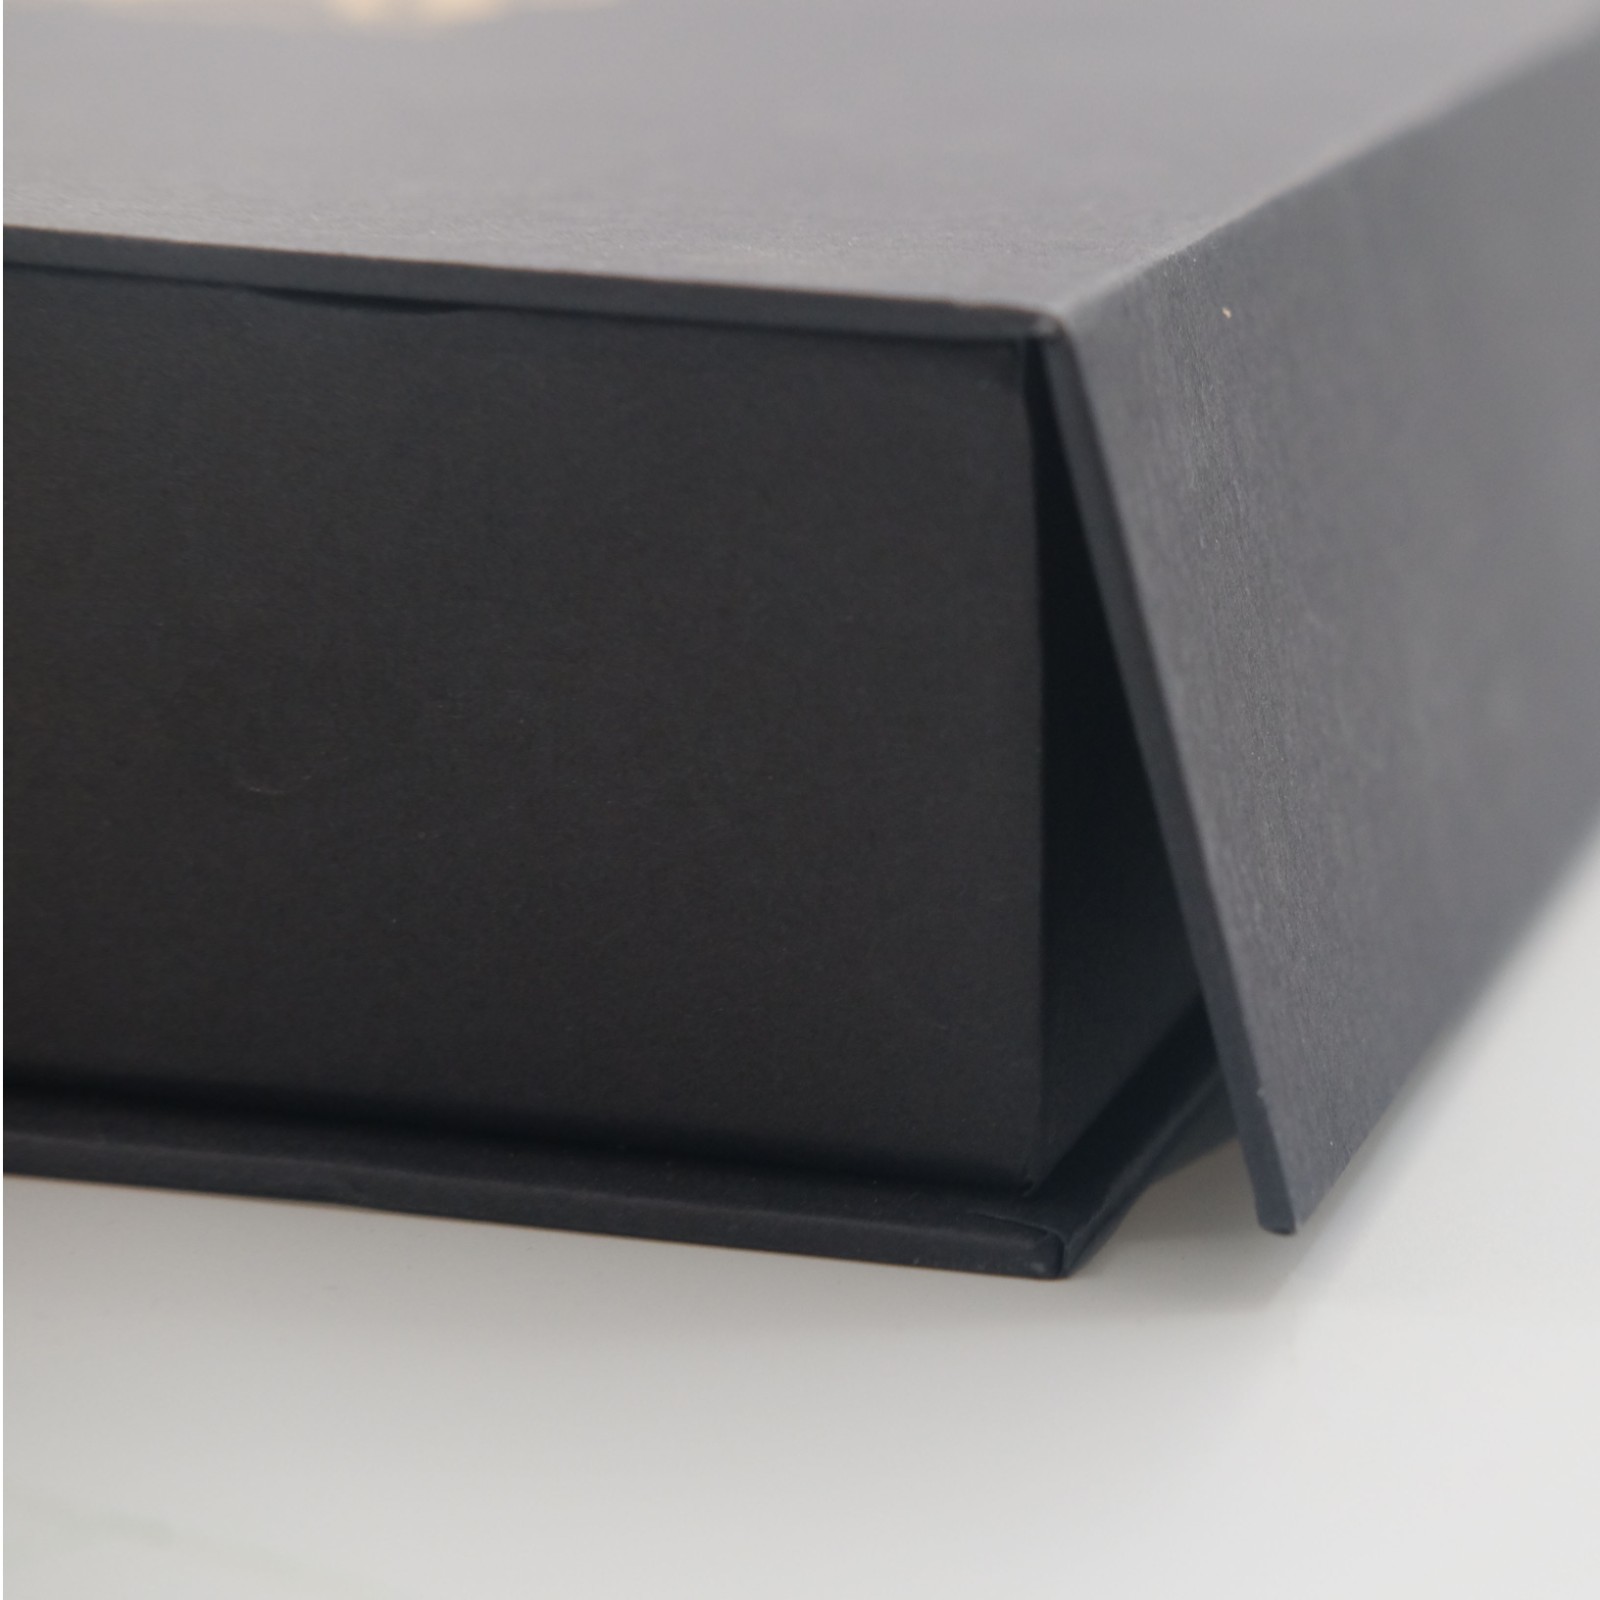 Welm cardboard black present box handmade online-8